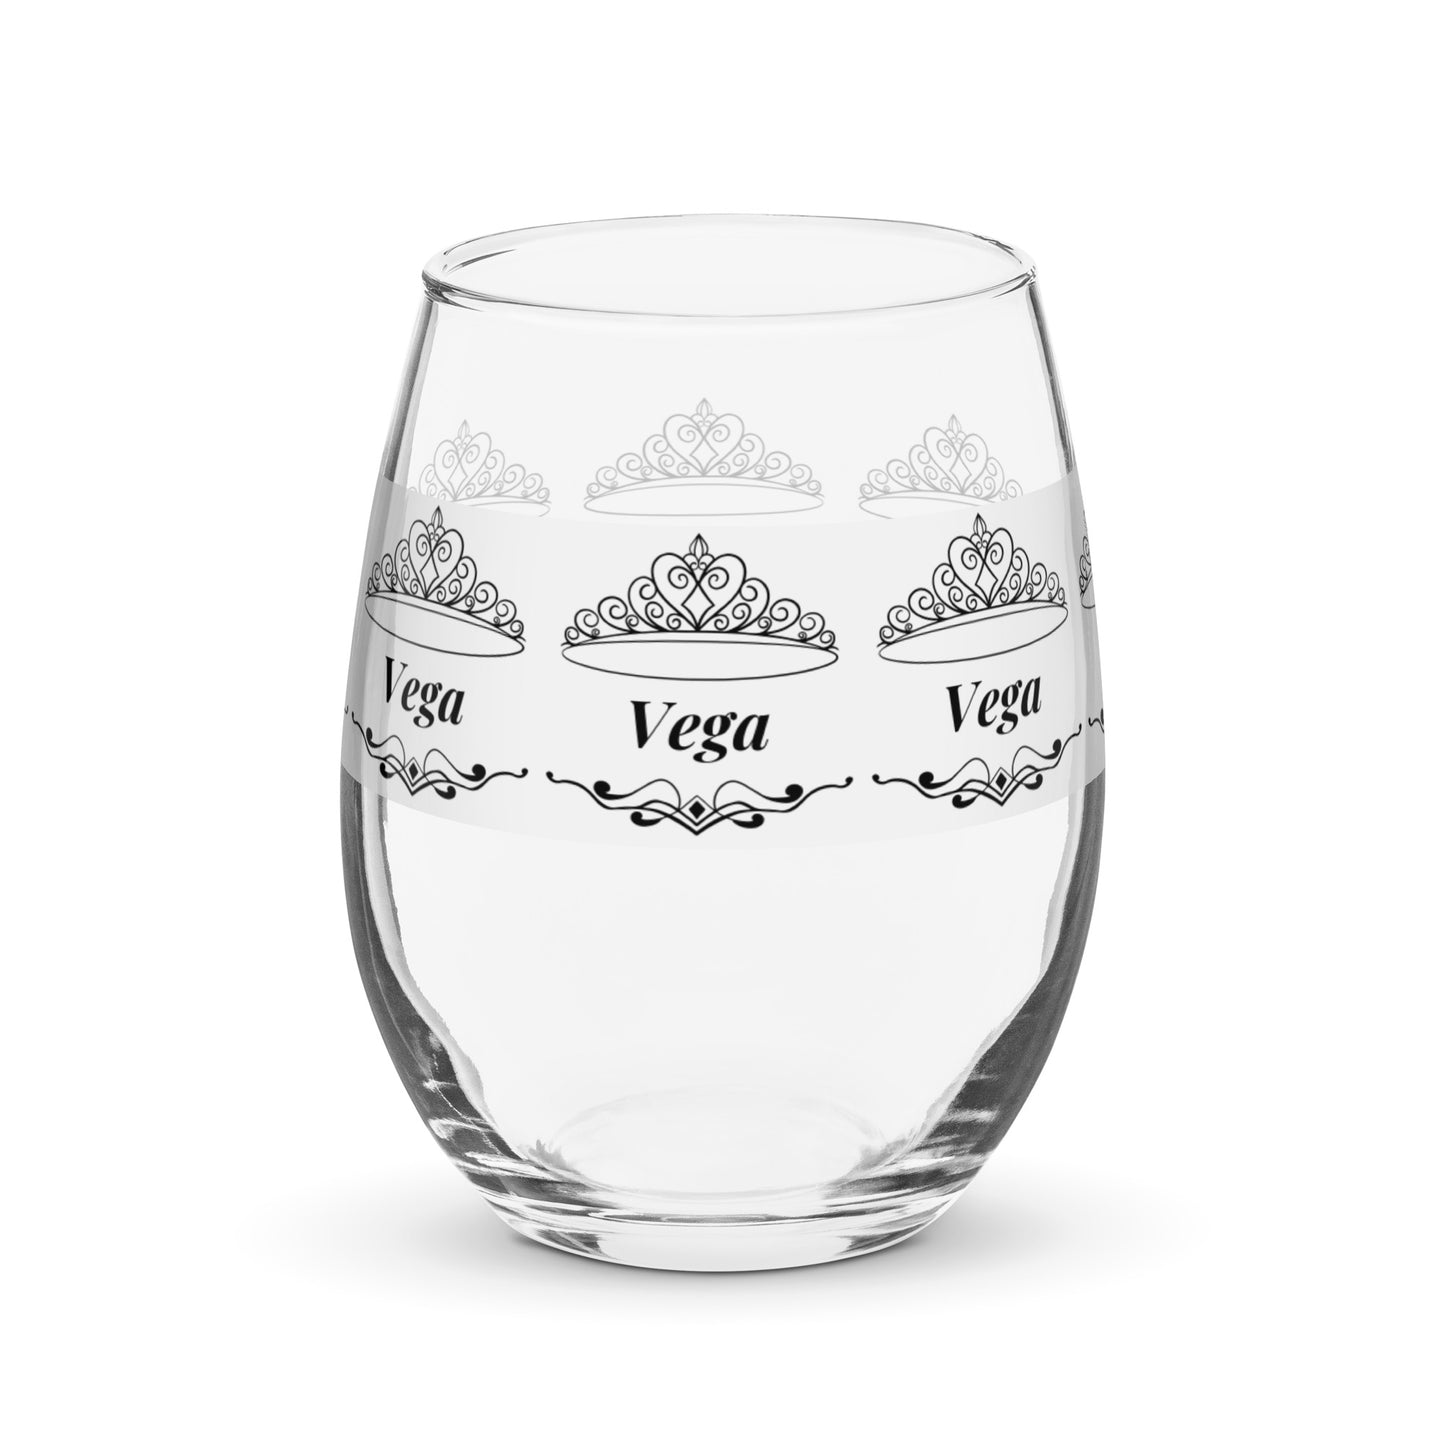 name wine glass personalized wine glass Vega wine glass